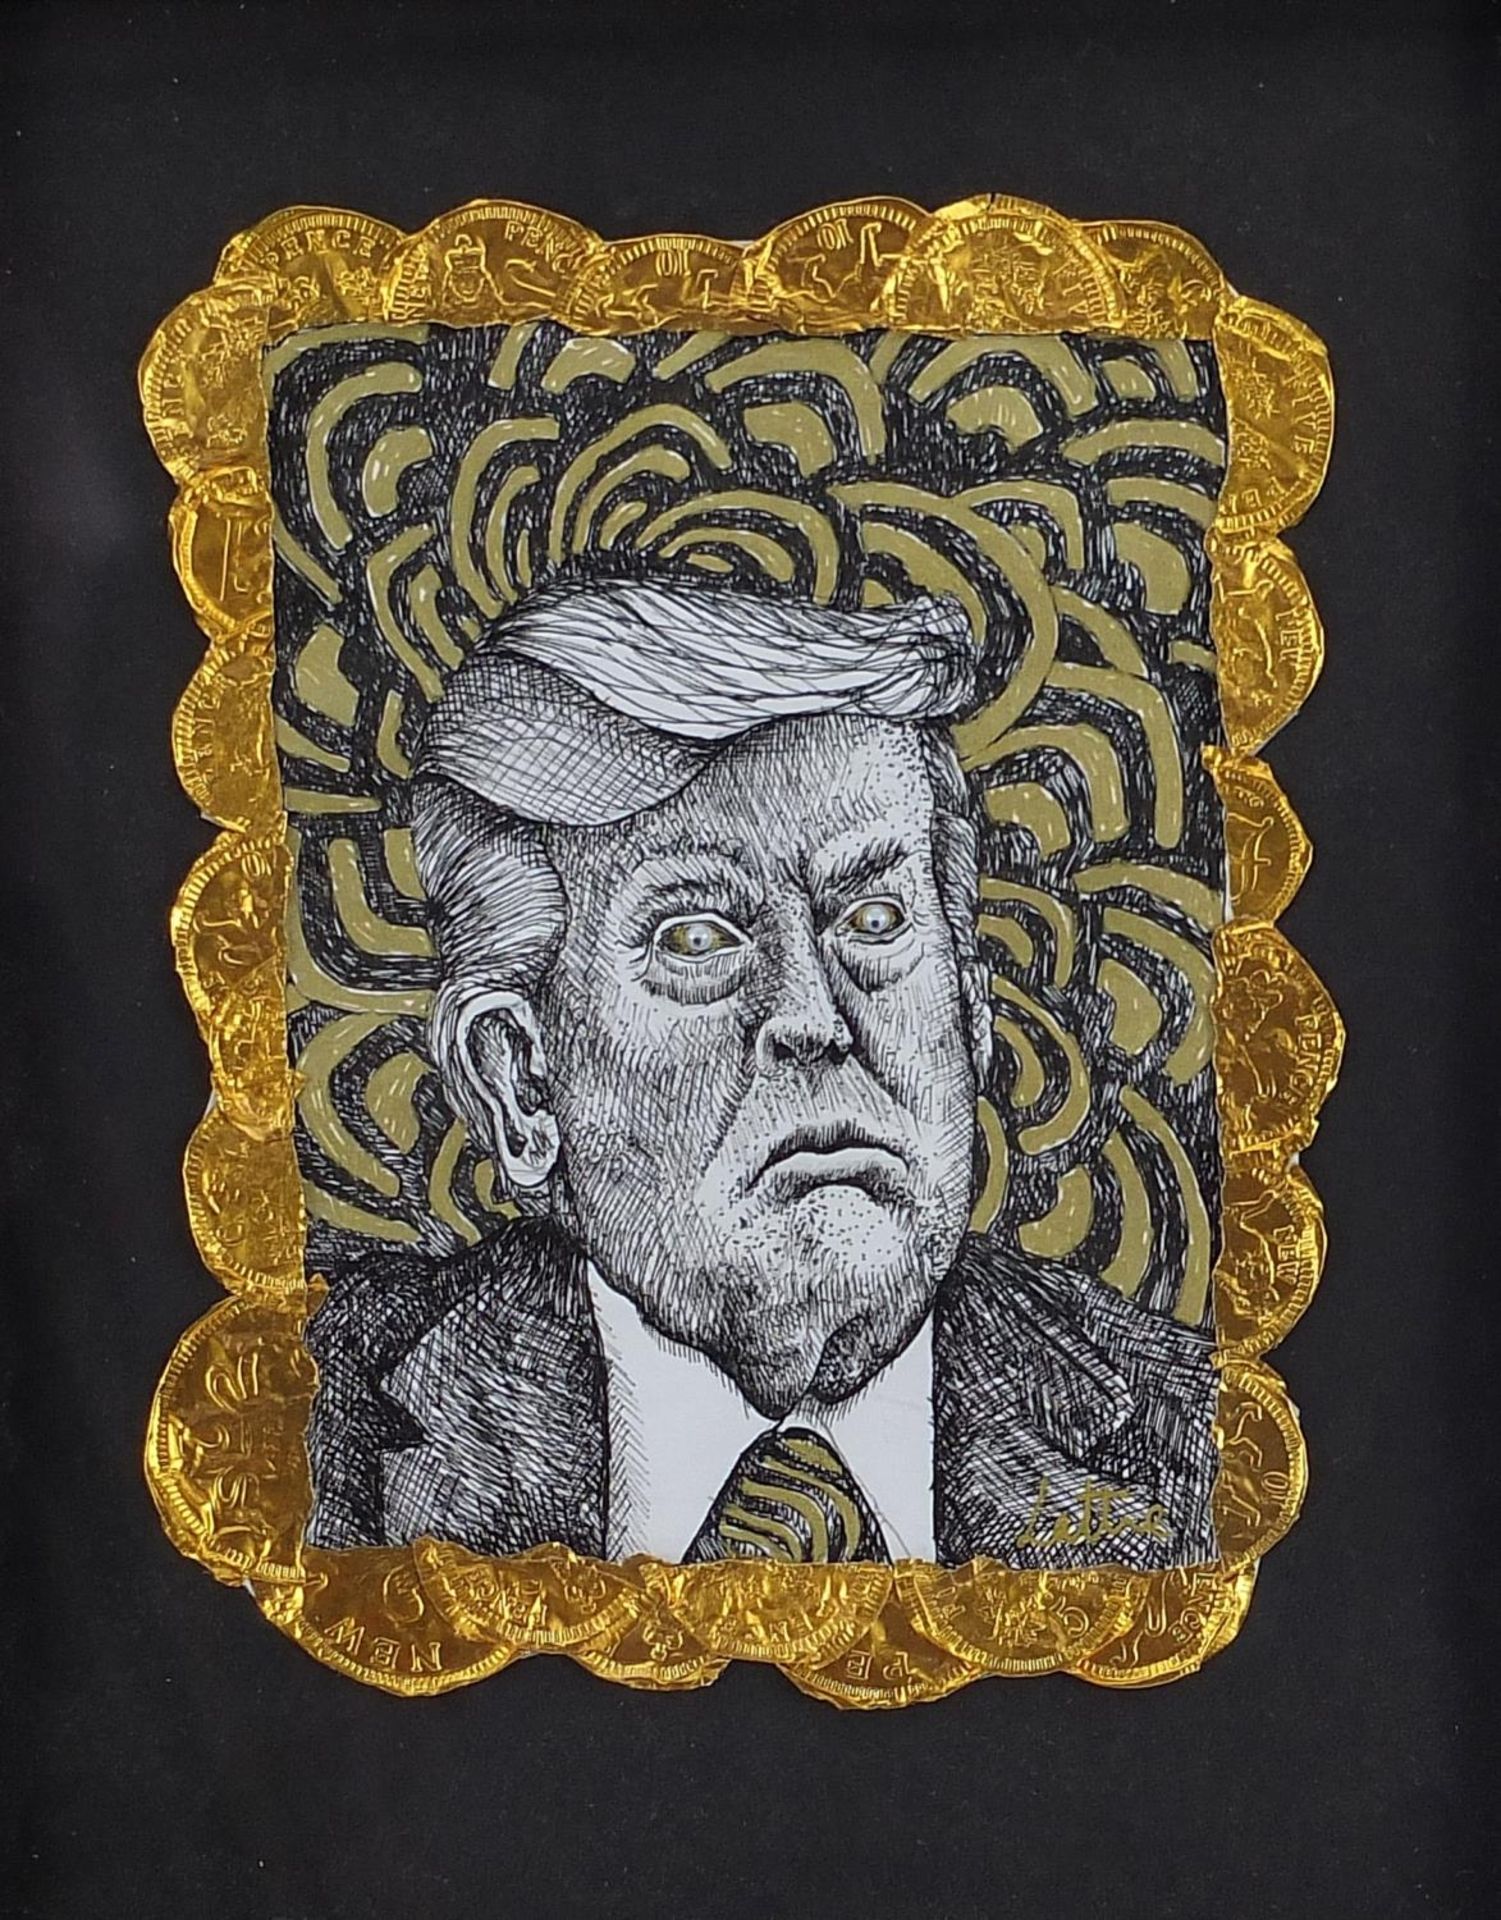 Lottie Norton Design - Head and shoulders caricature portrait of Donald Trump, mixed media and